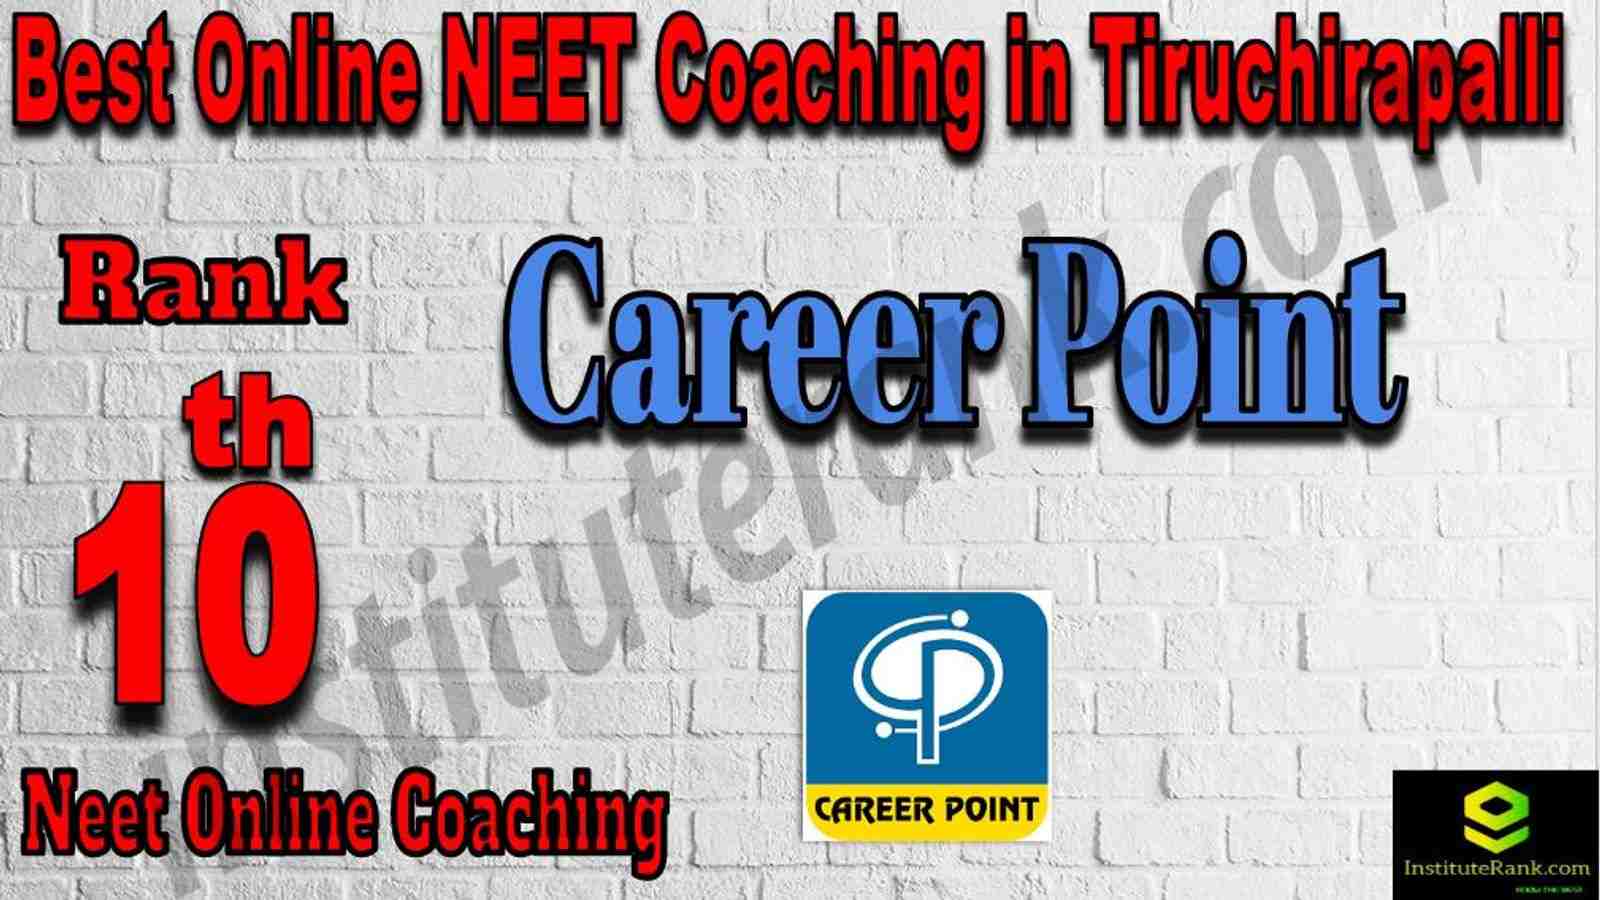 10th Best Online Neet Coaching in Tiruchirapalli